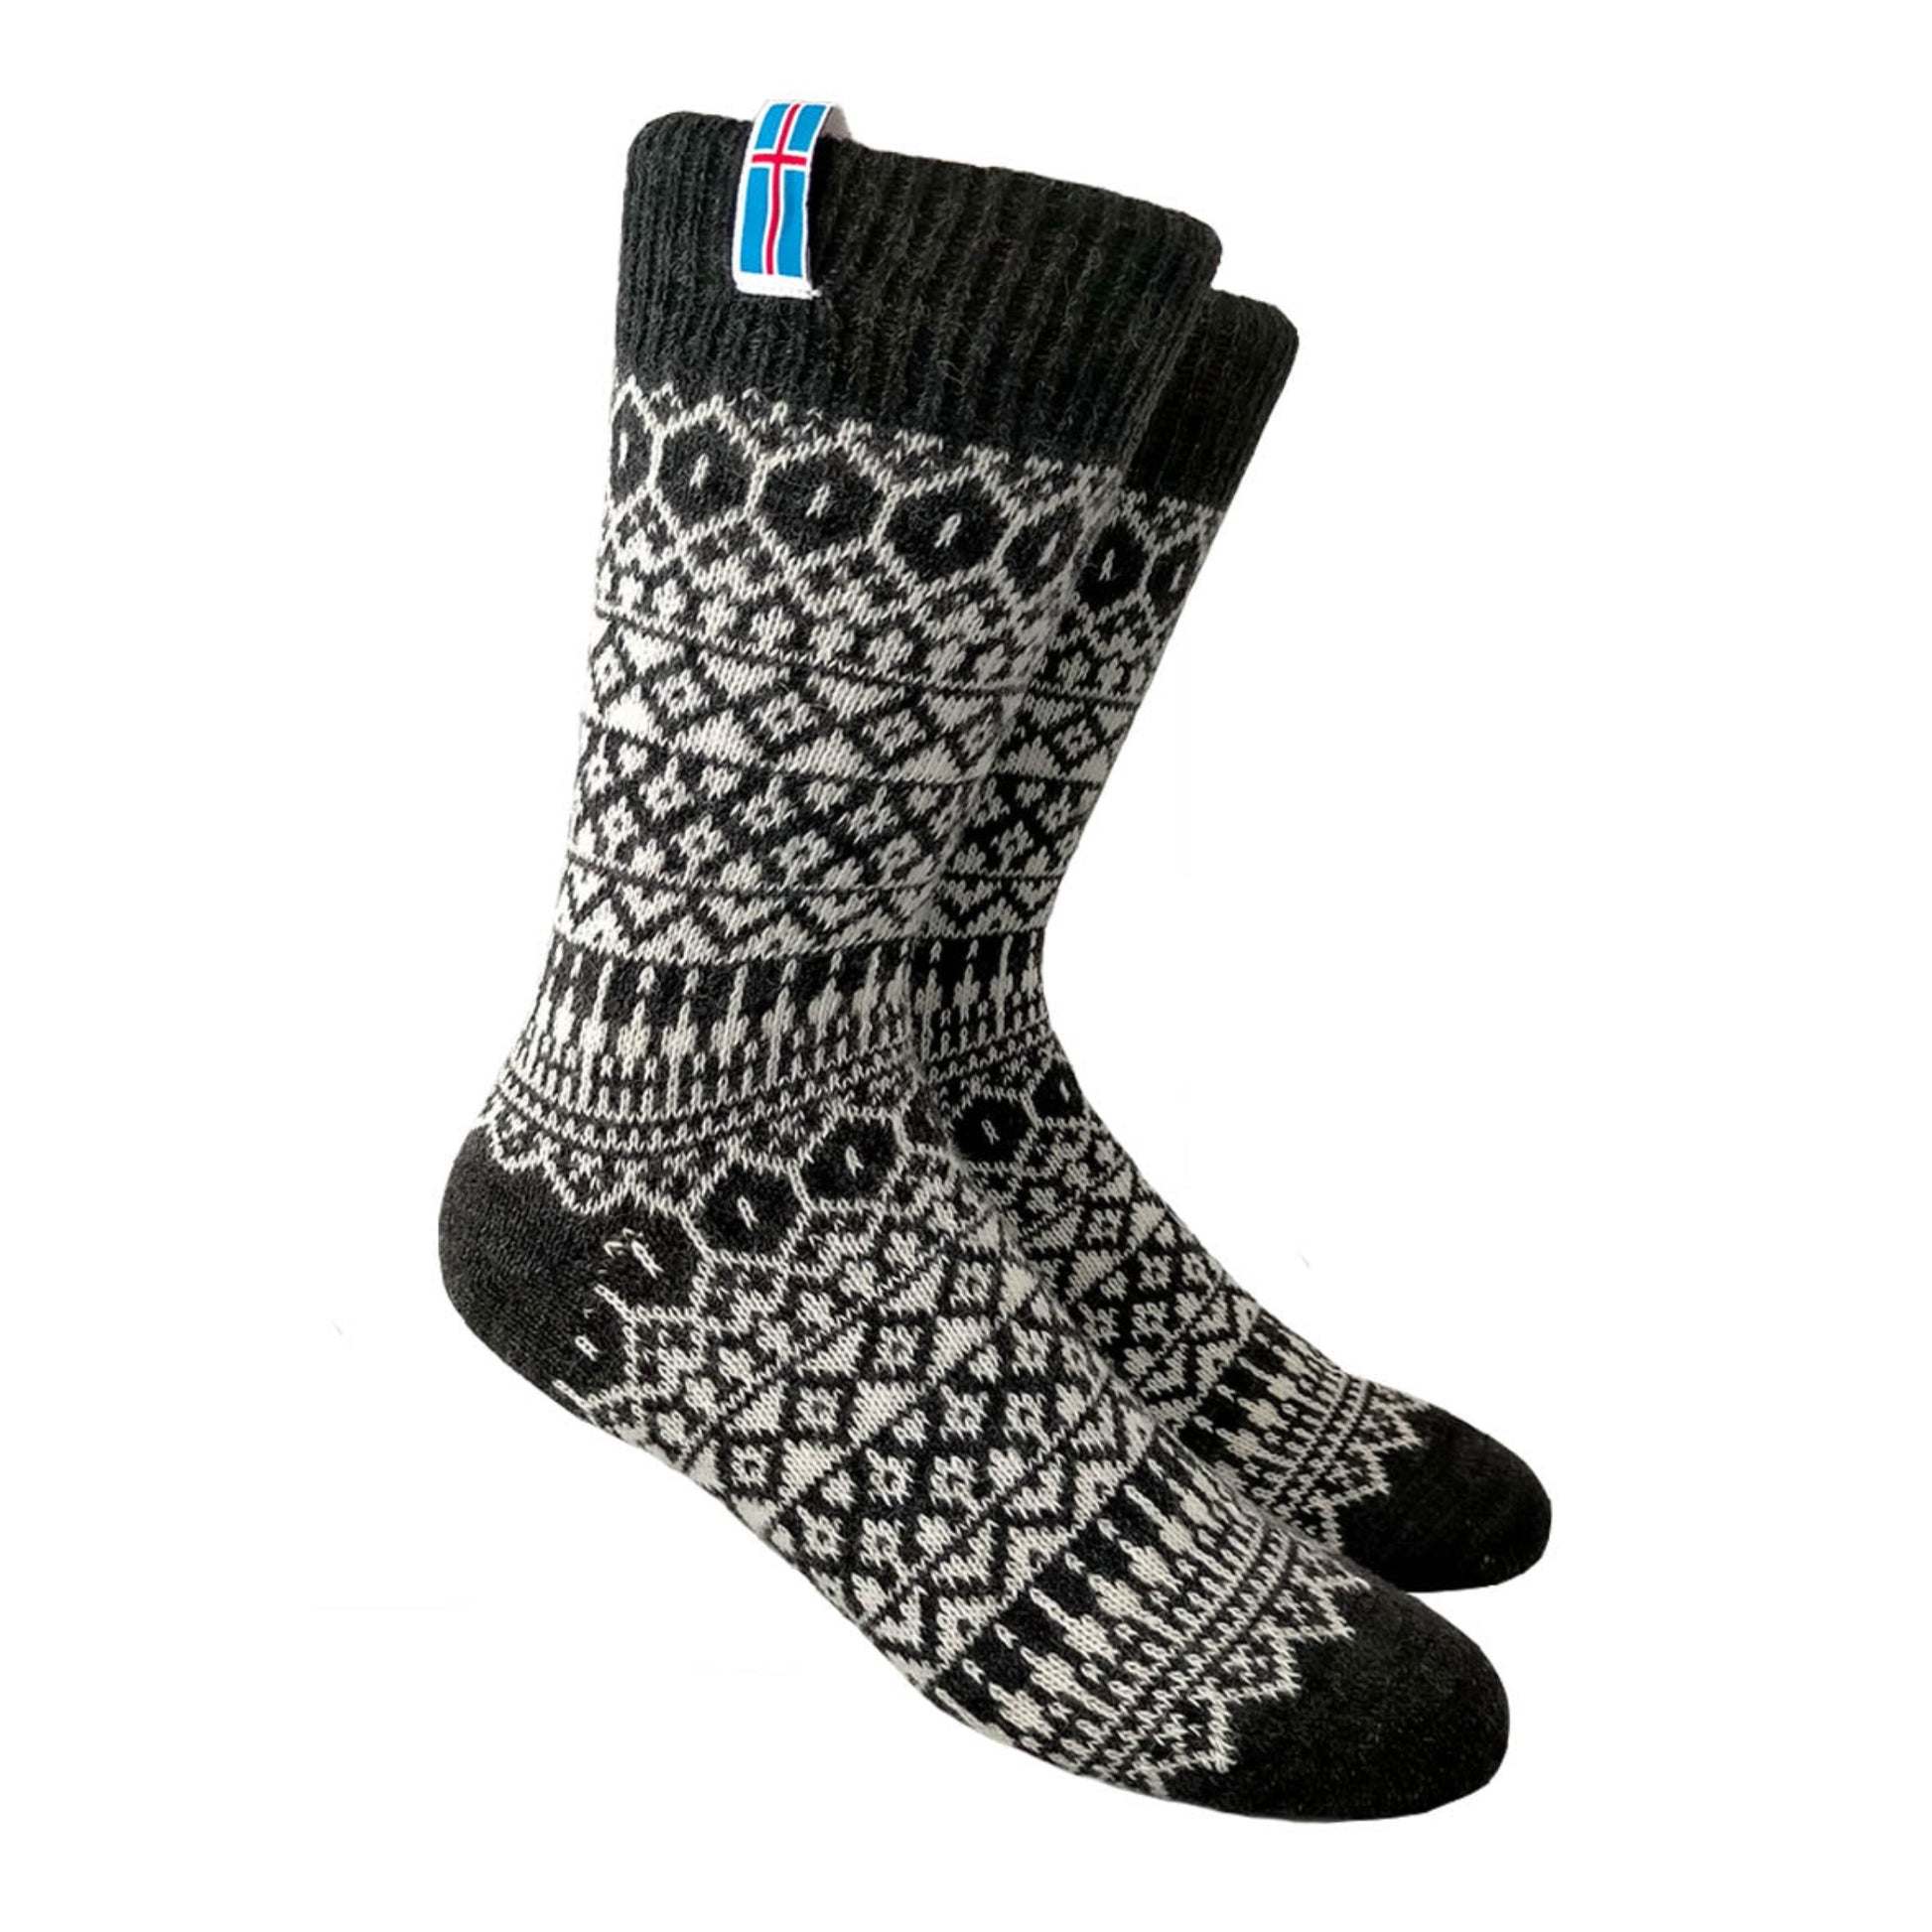 NORWOOL Wool Socks Iceland, Charcoal/White (6583972692033)